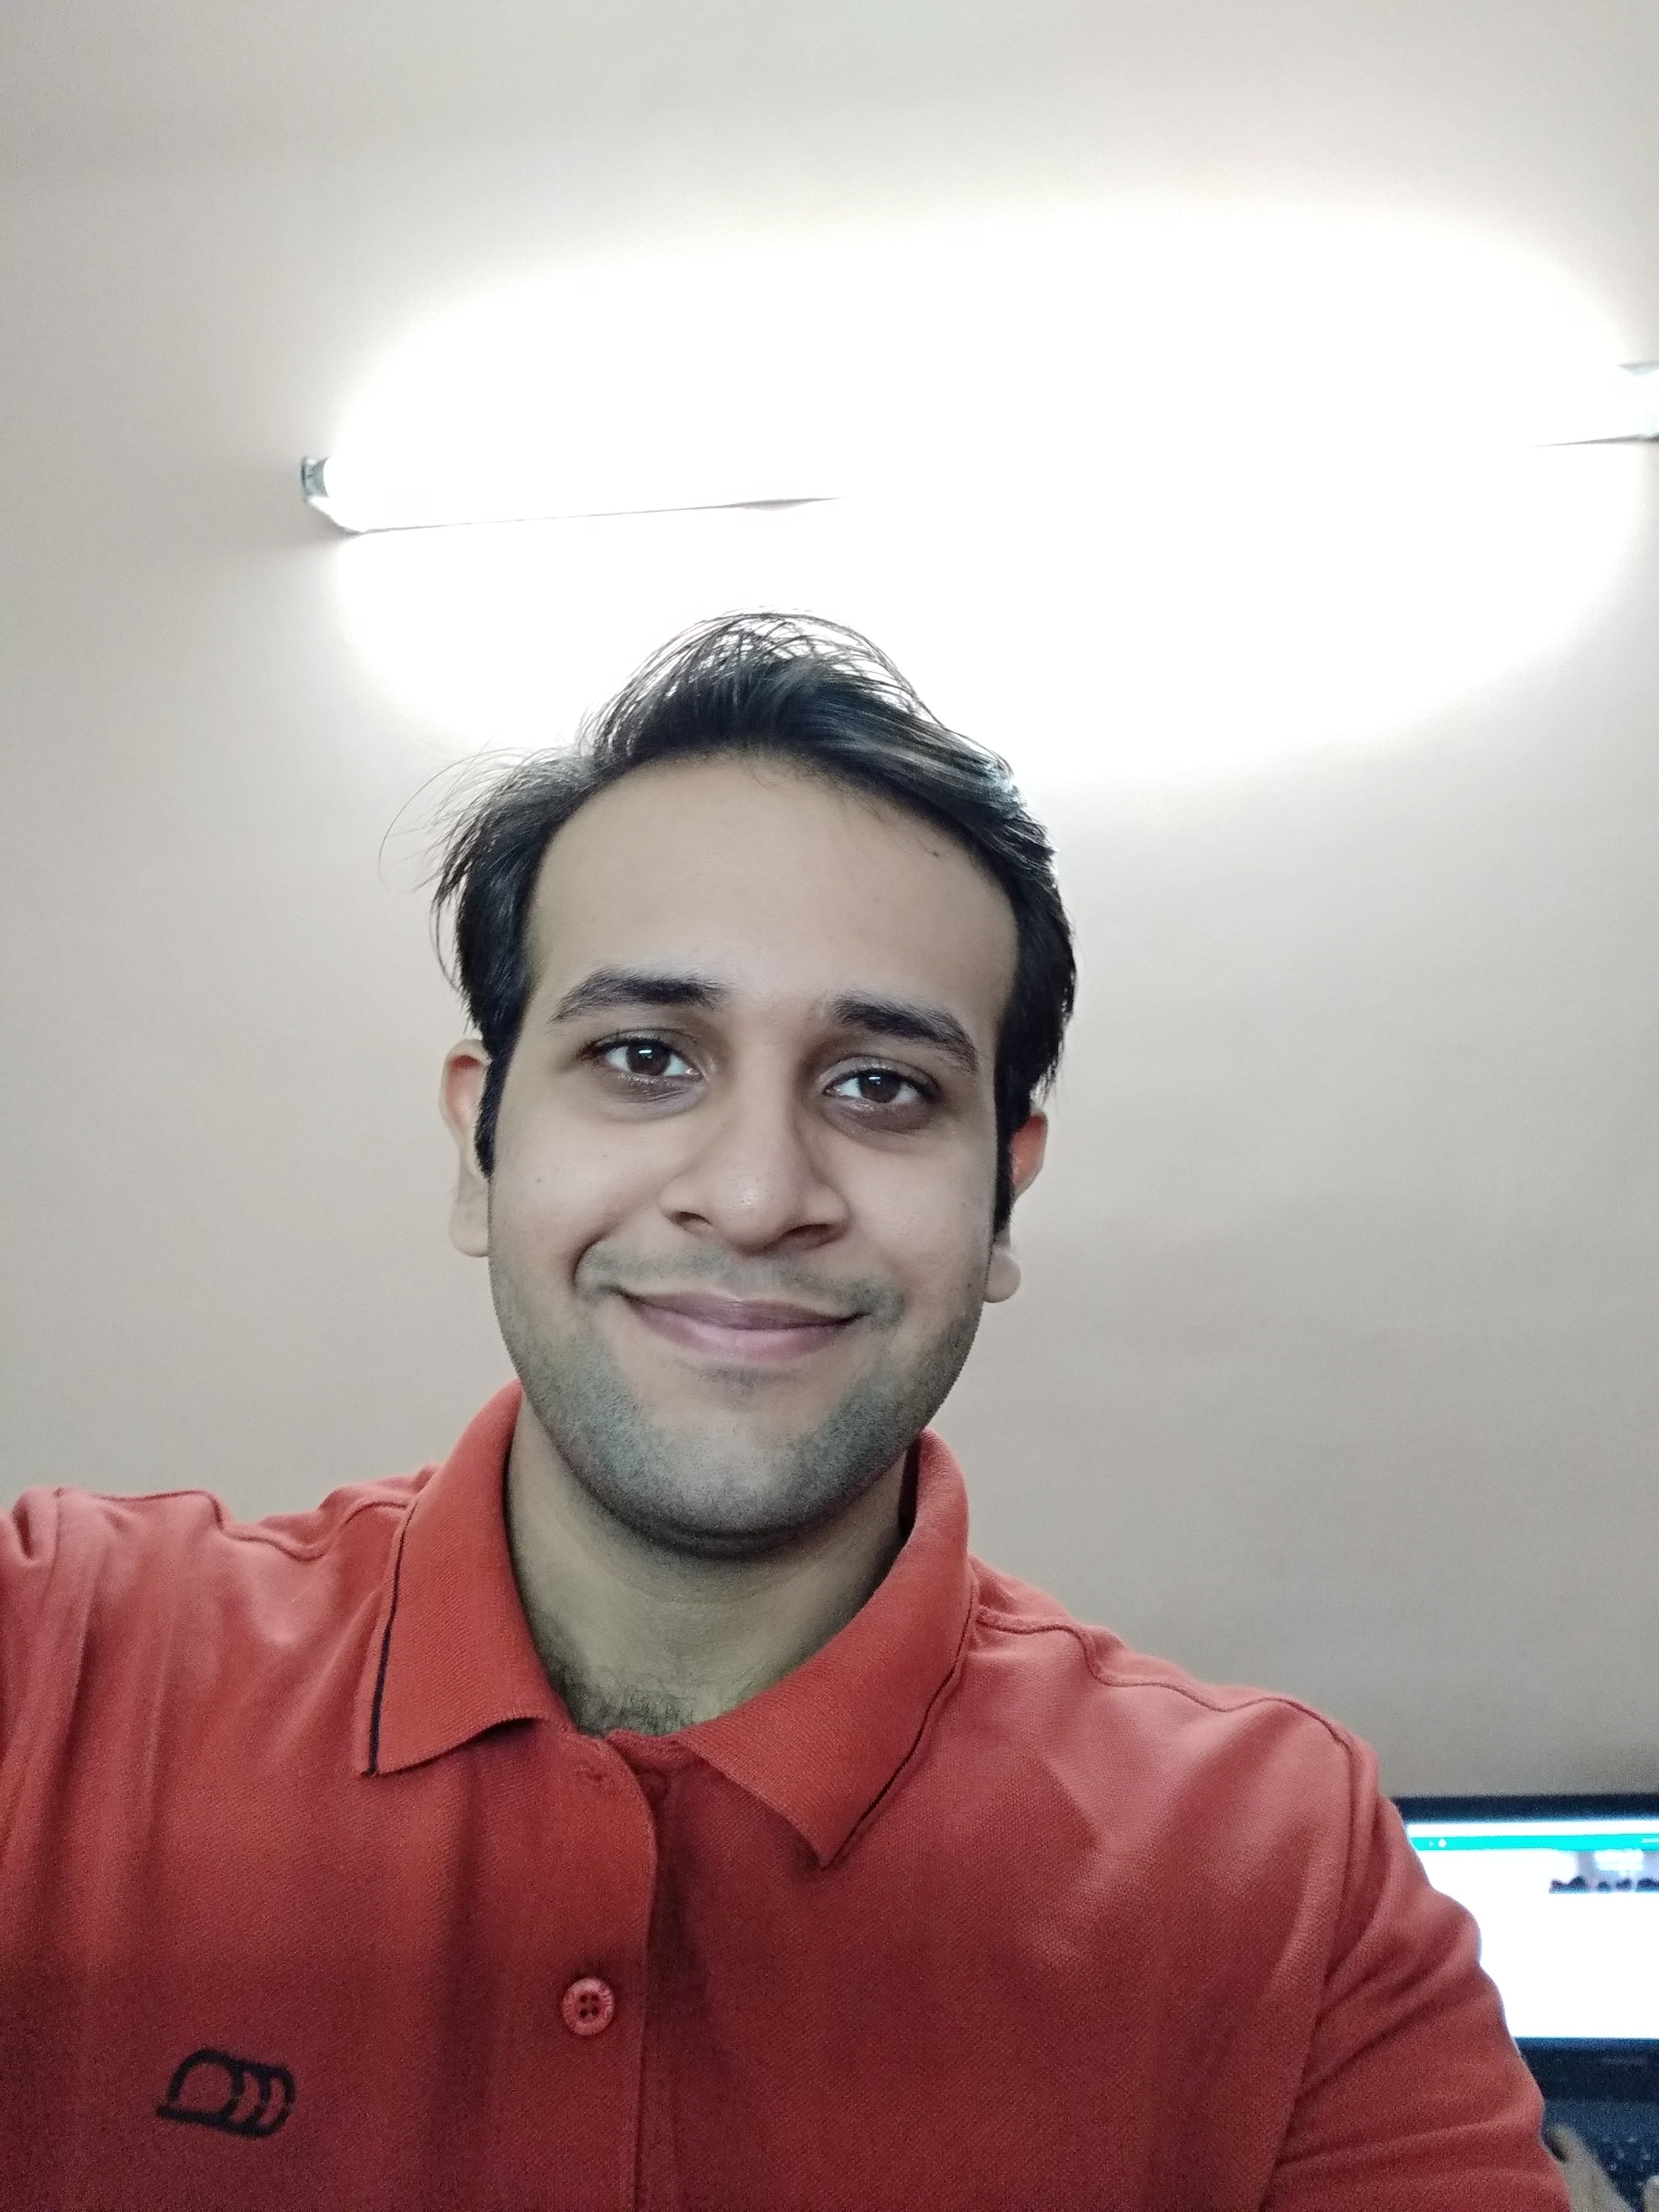 Xiaomi Redmi Y1 Selfie camera review: More than just a good camera